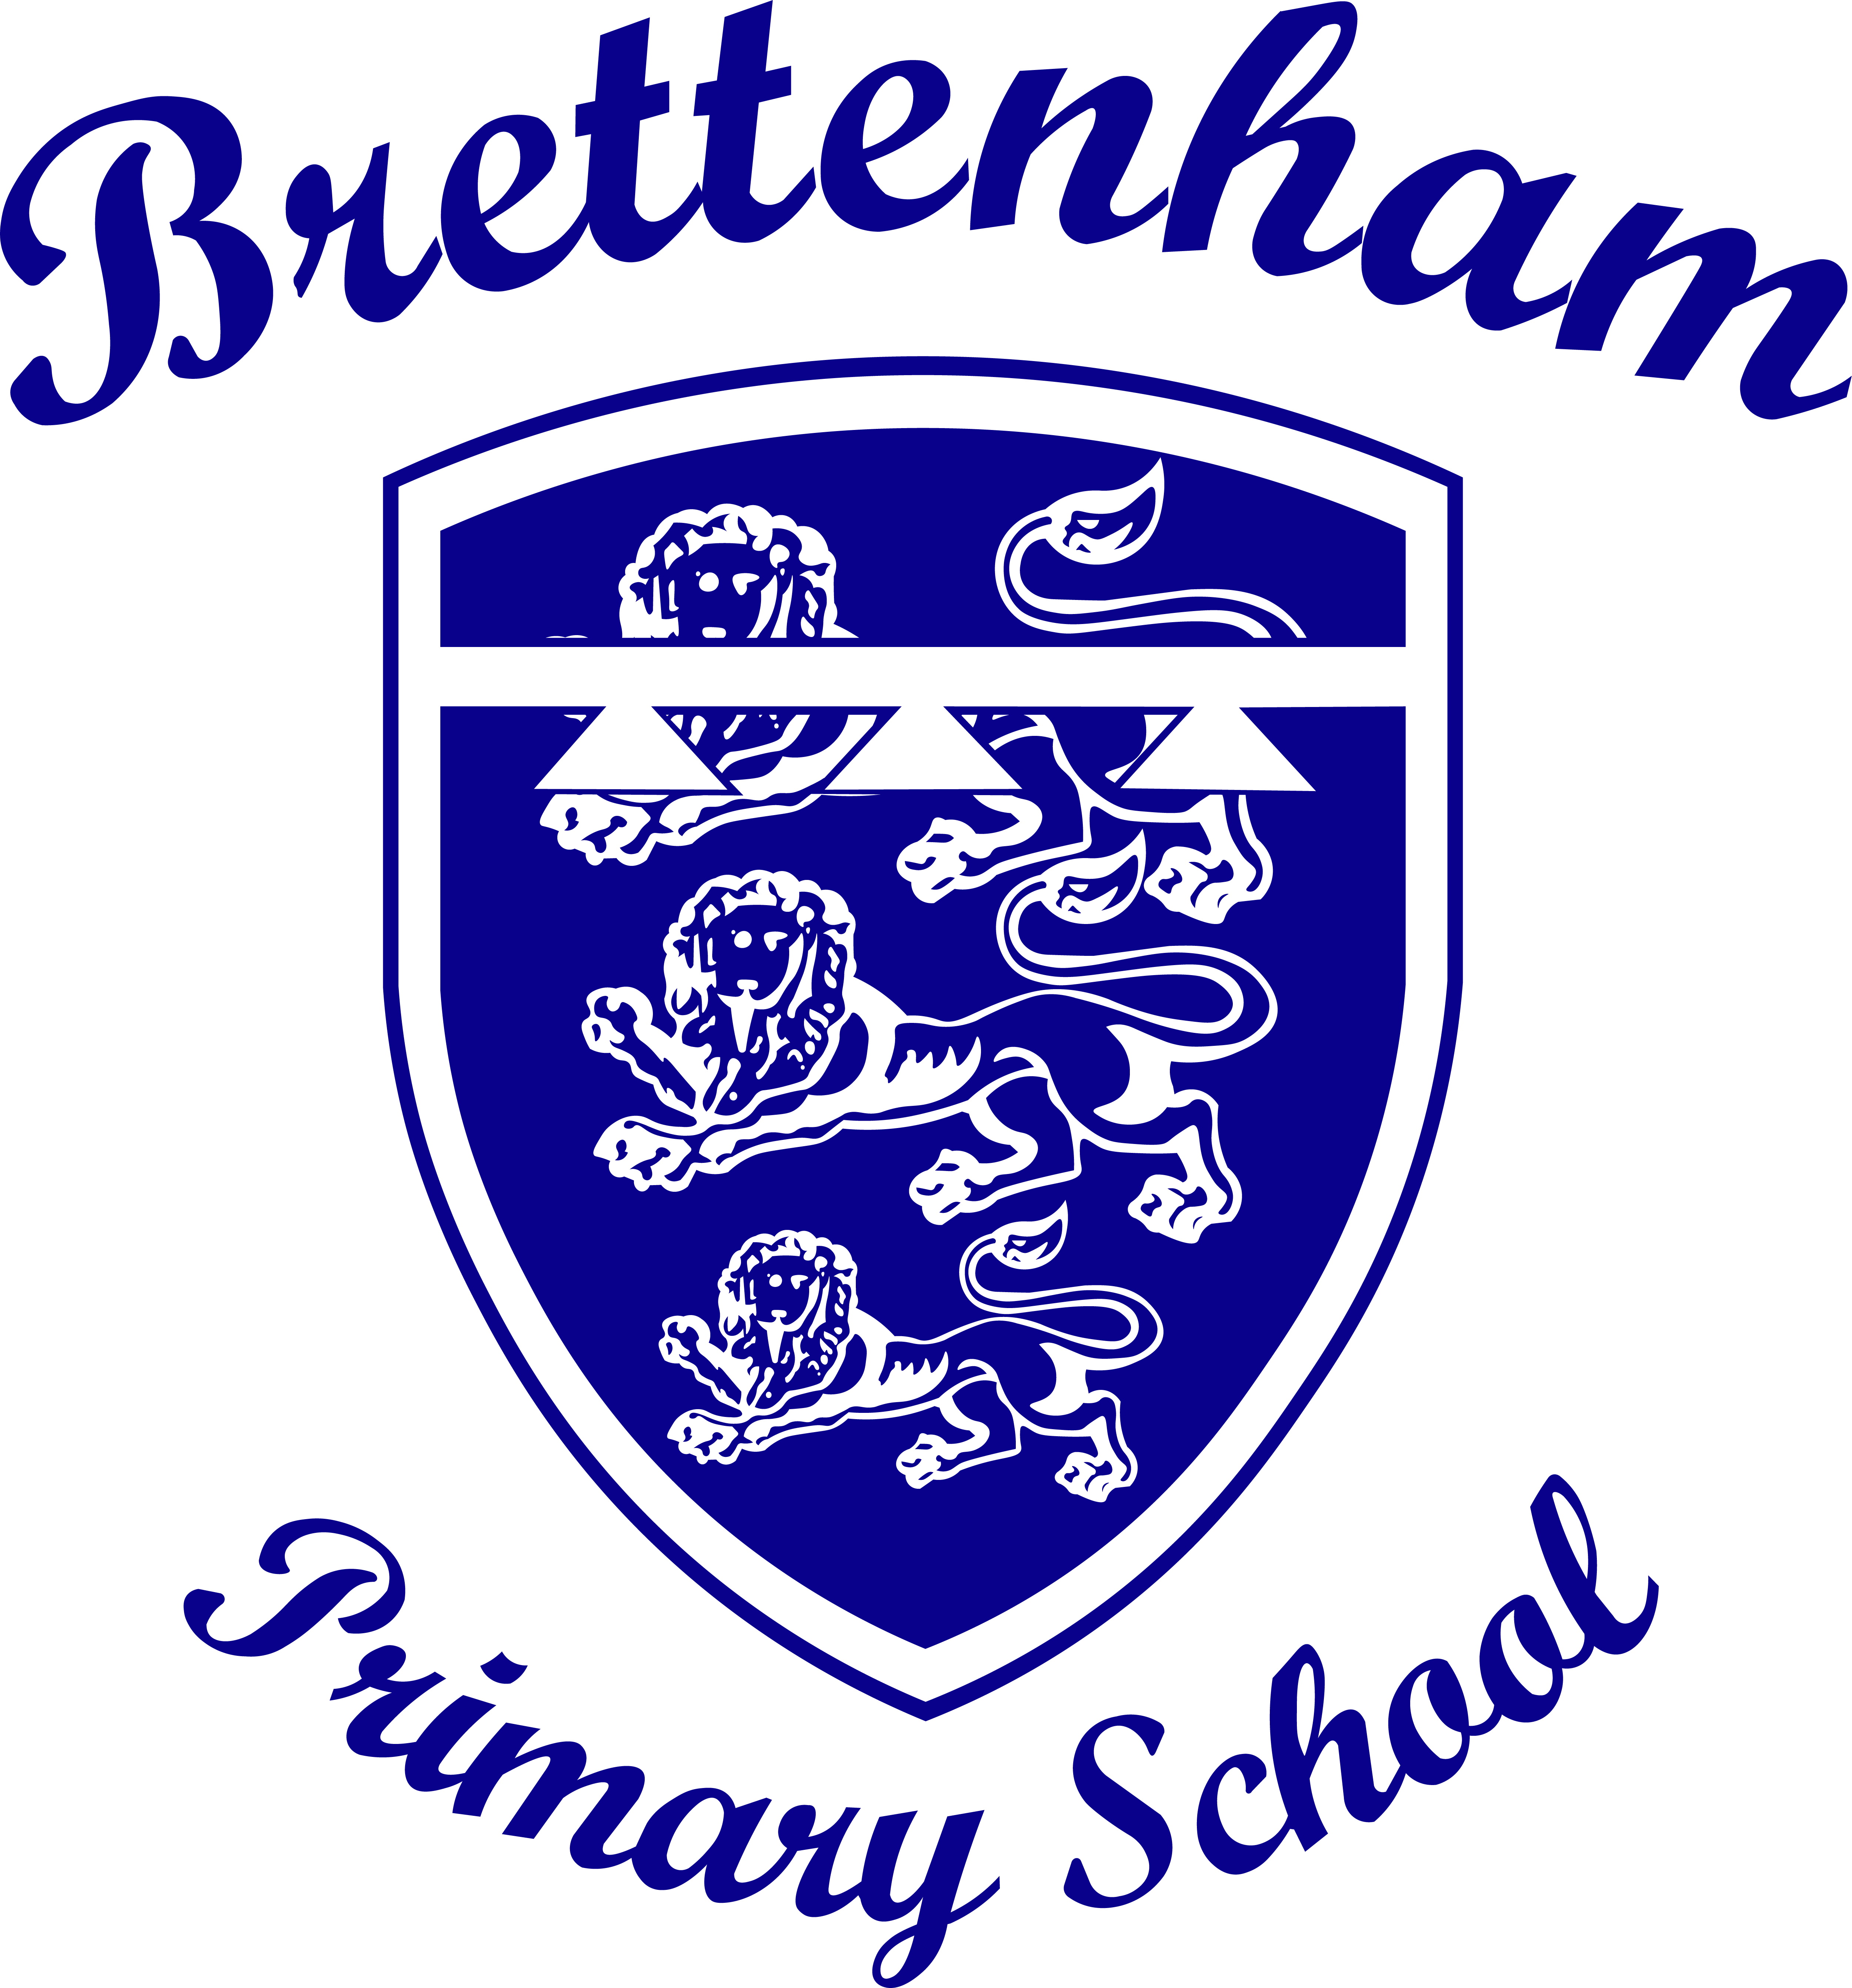 Brettenham Primary School